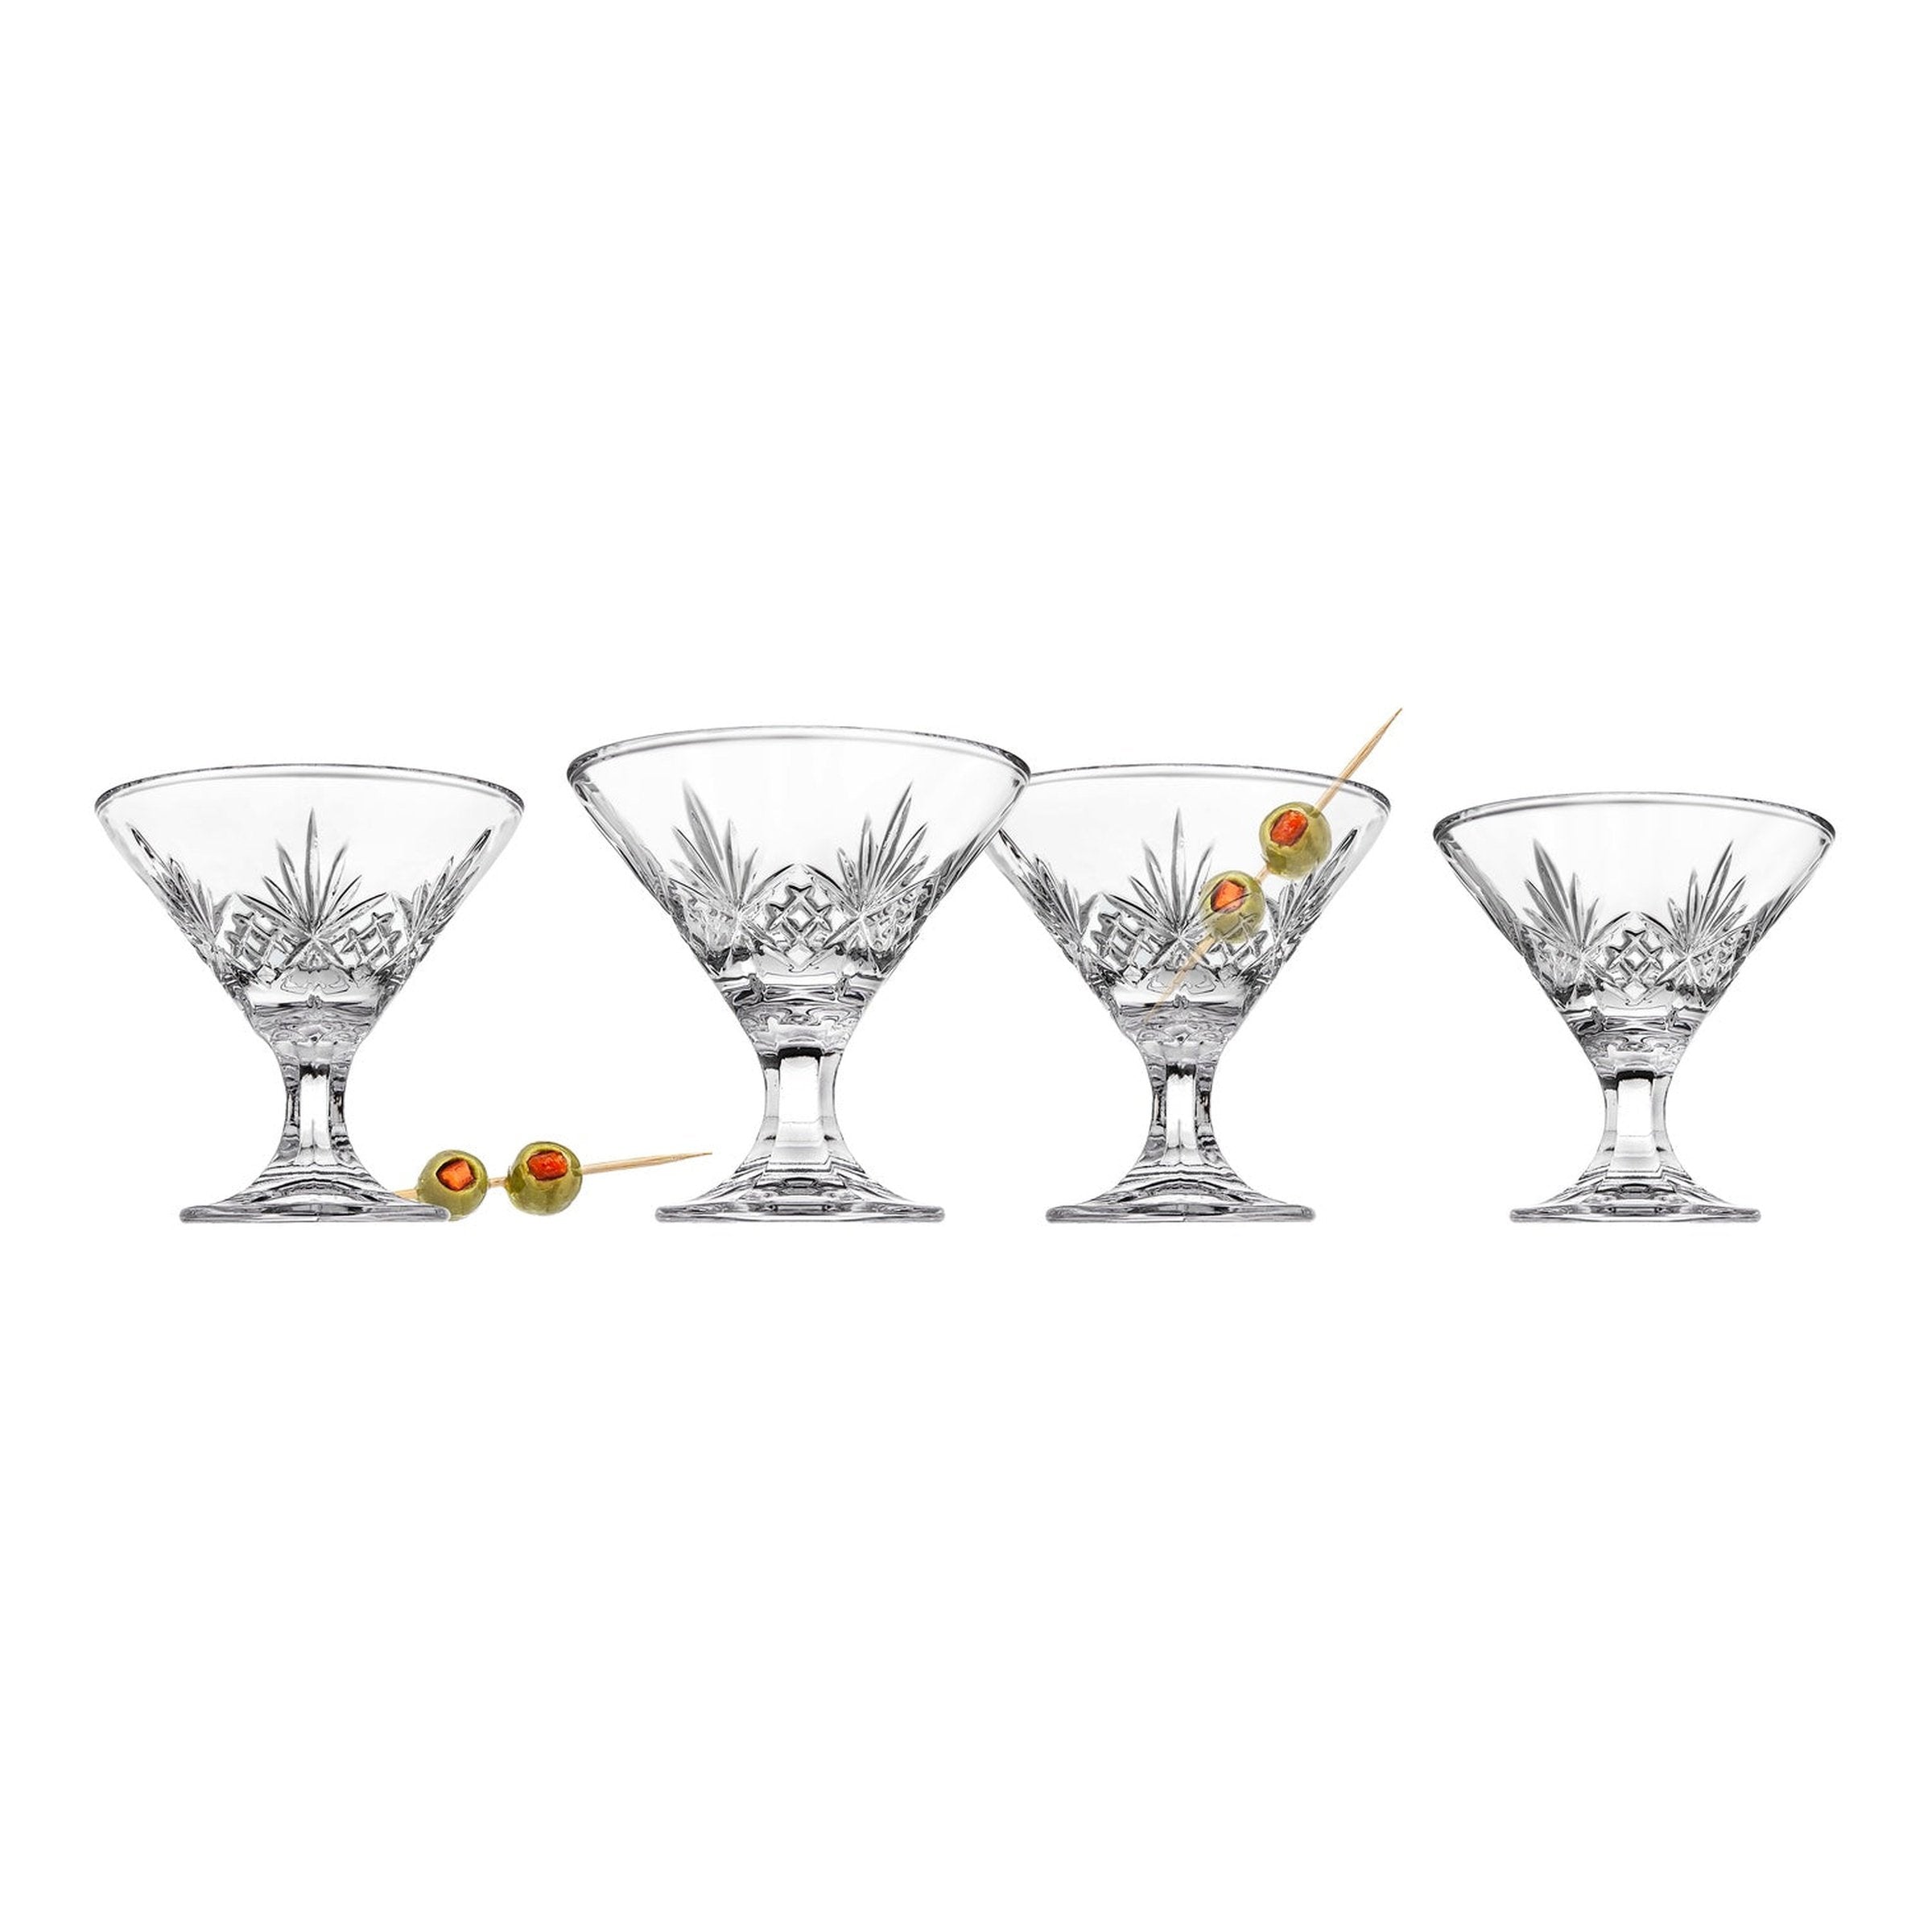 set of 4 Godinger crystal Martini glasses NWOB, 6 3/4” tall., 5”wide  REDUCED 15%